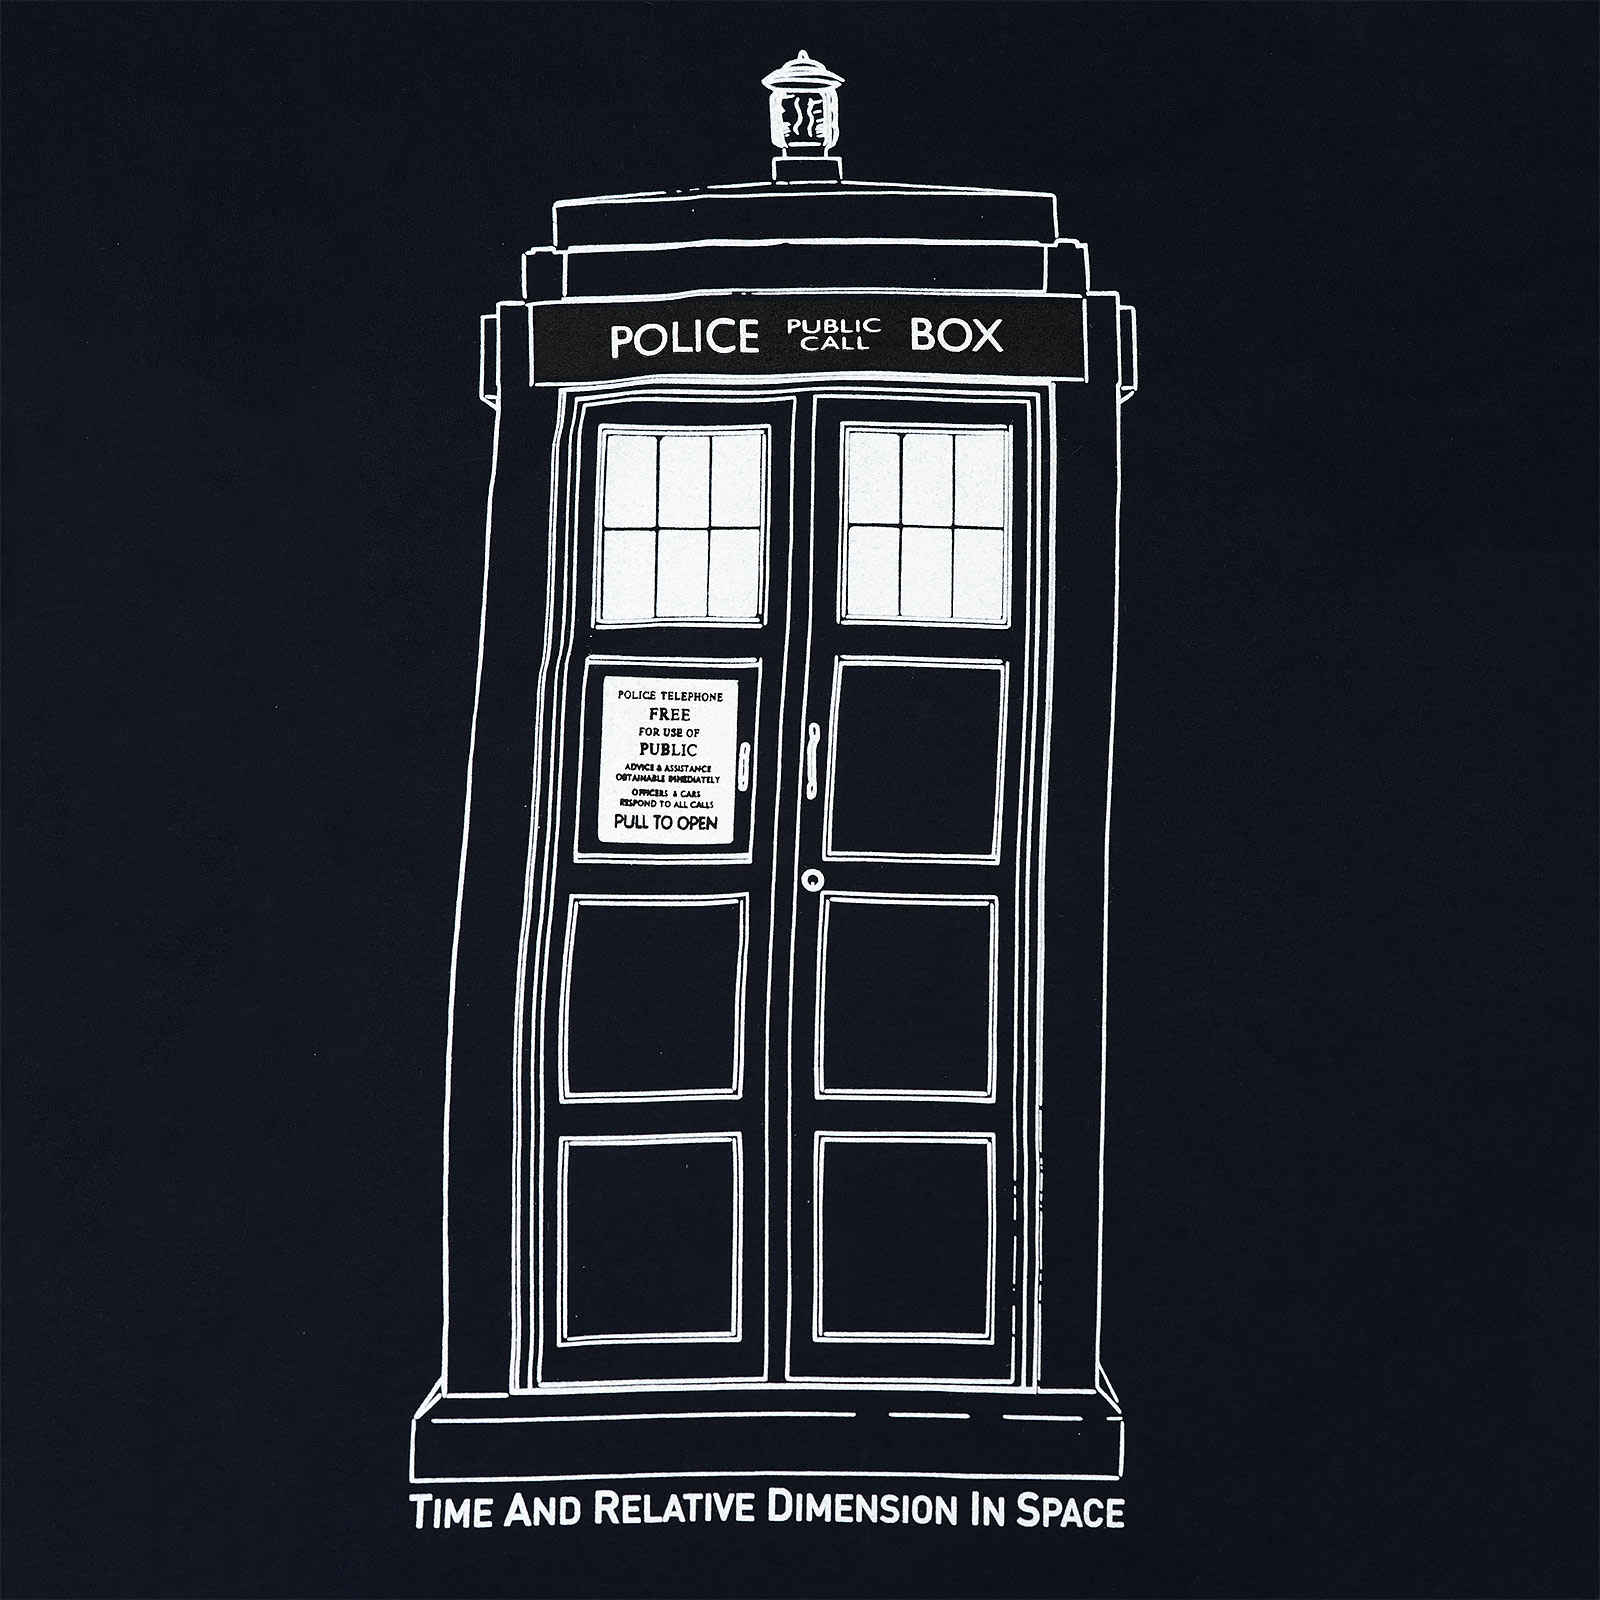 Doctor Who - Tardis Outline T-Shirt blau